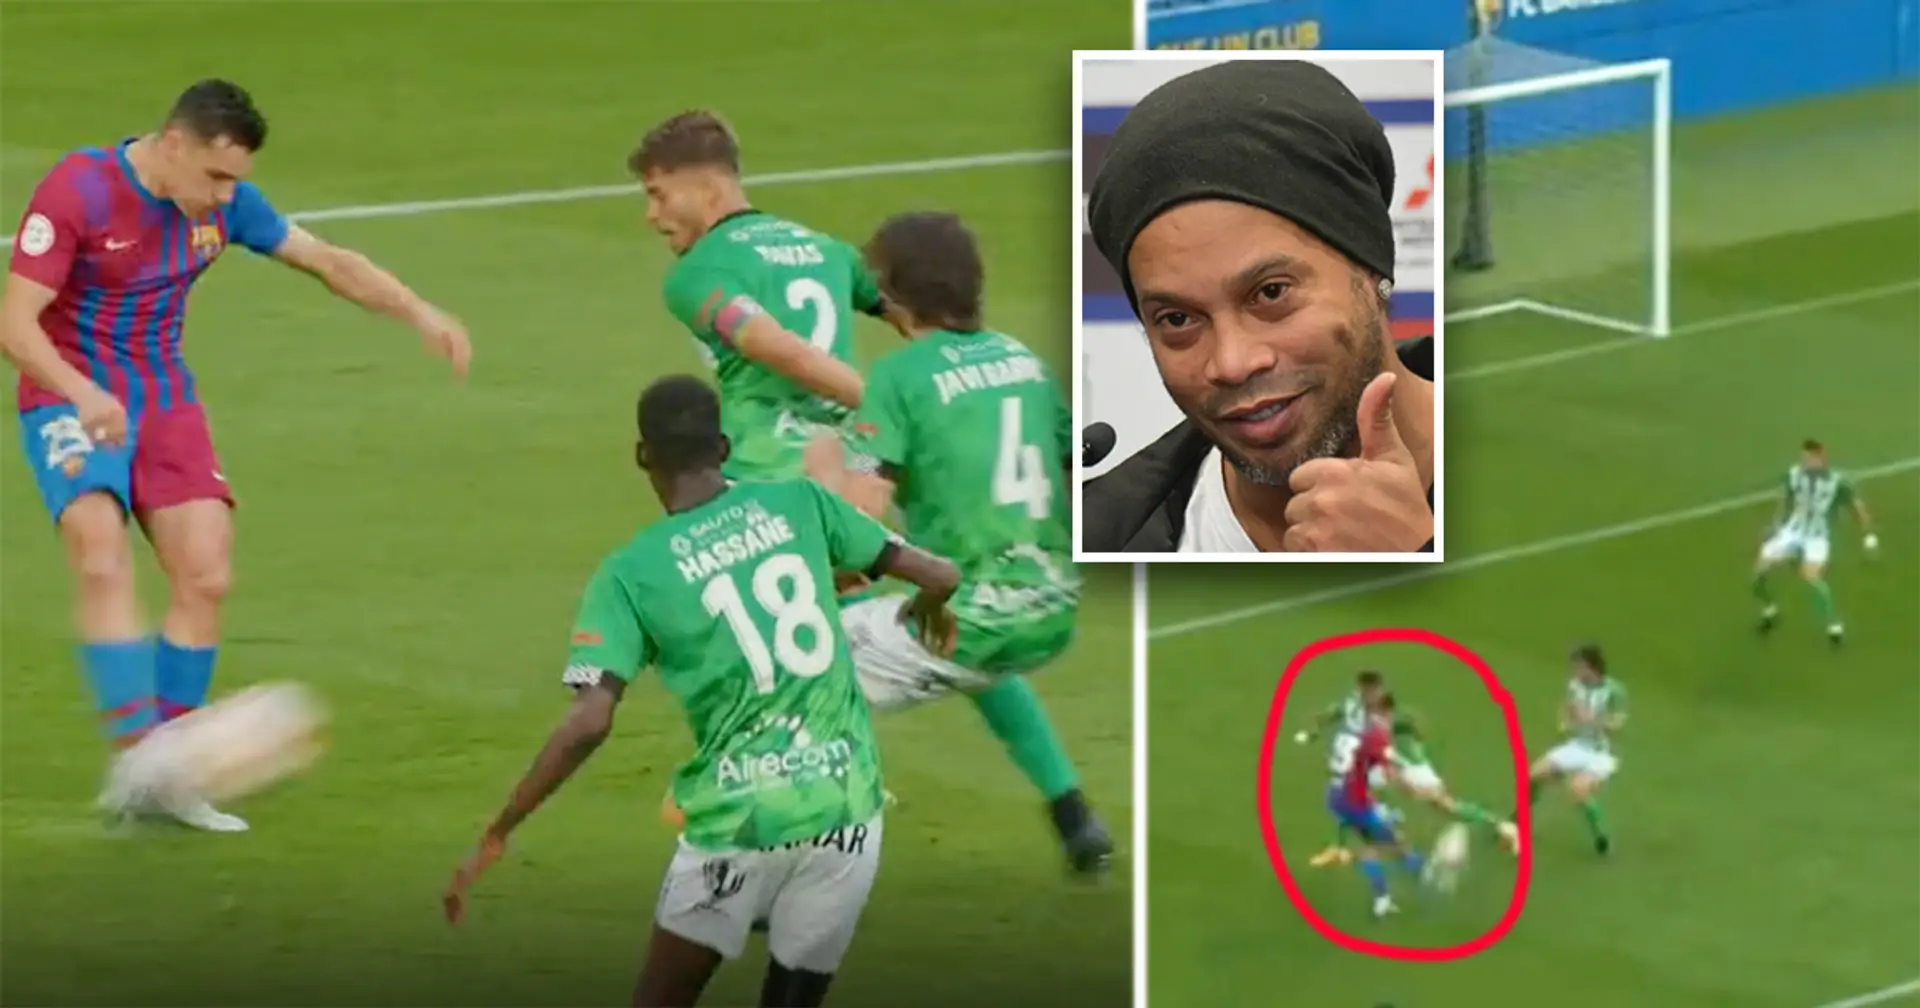 Jutgla delivers exquisite finish Ronaldinho would be proud of (video)